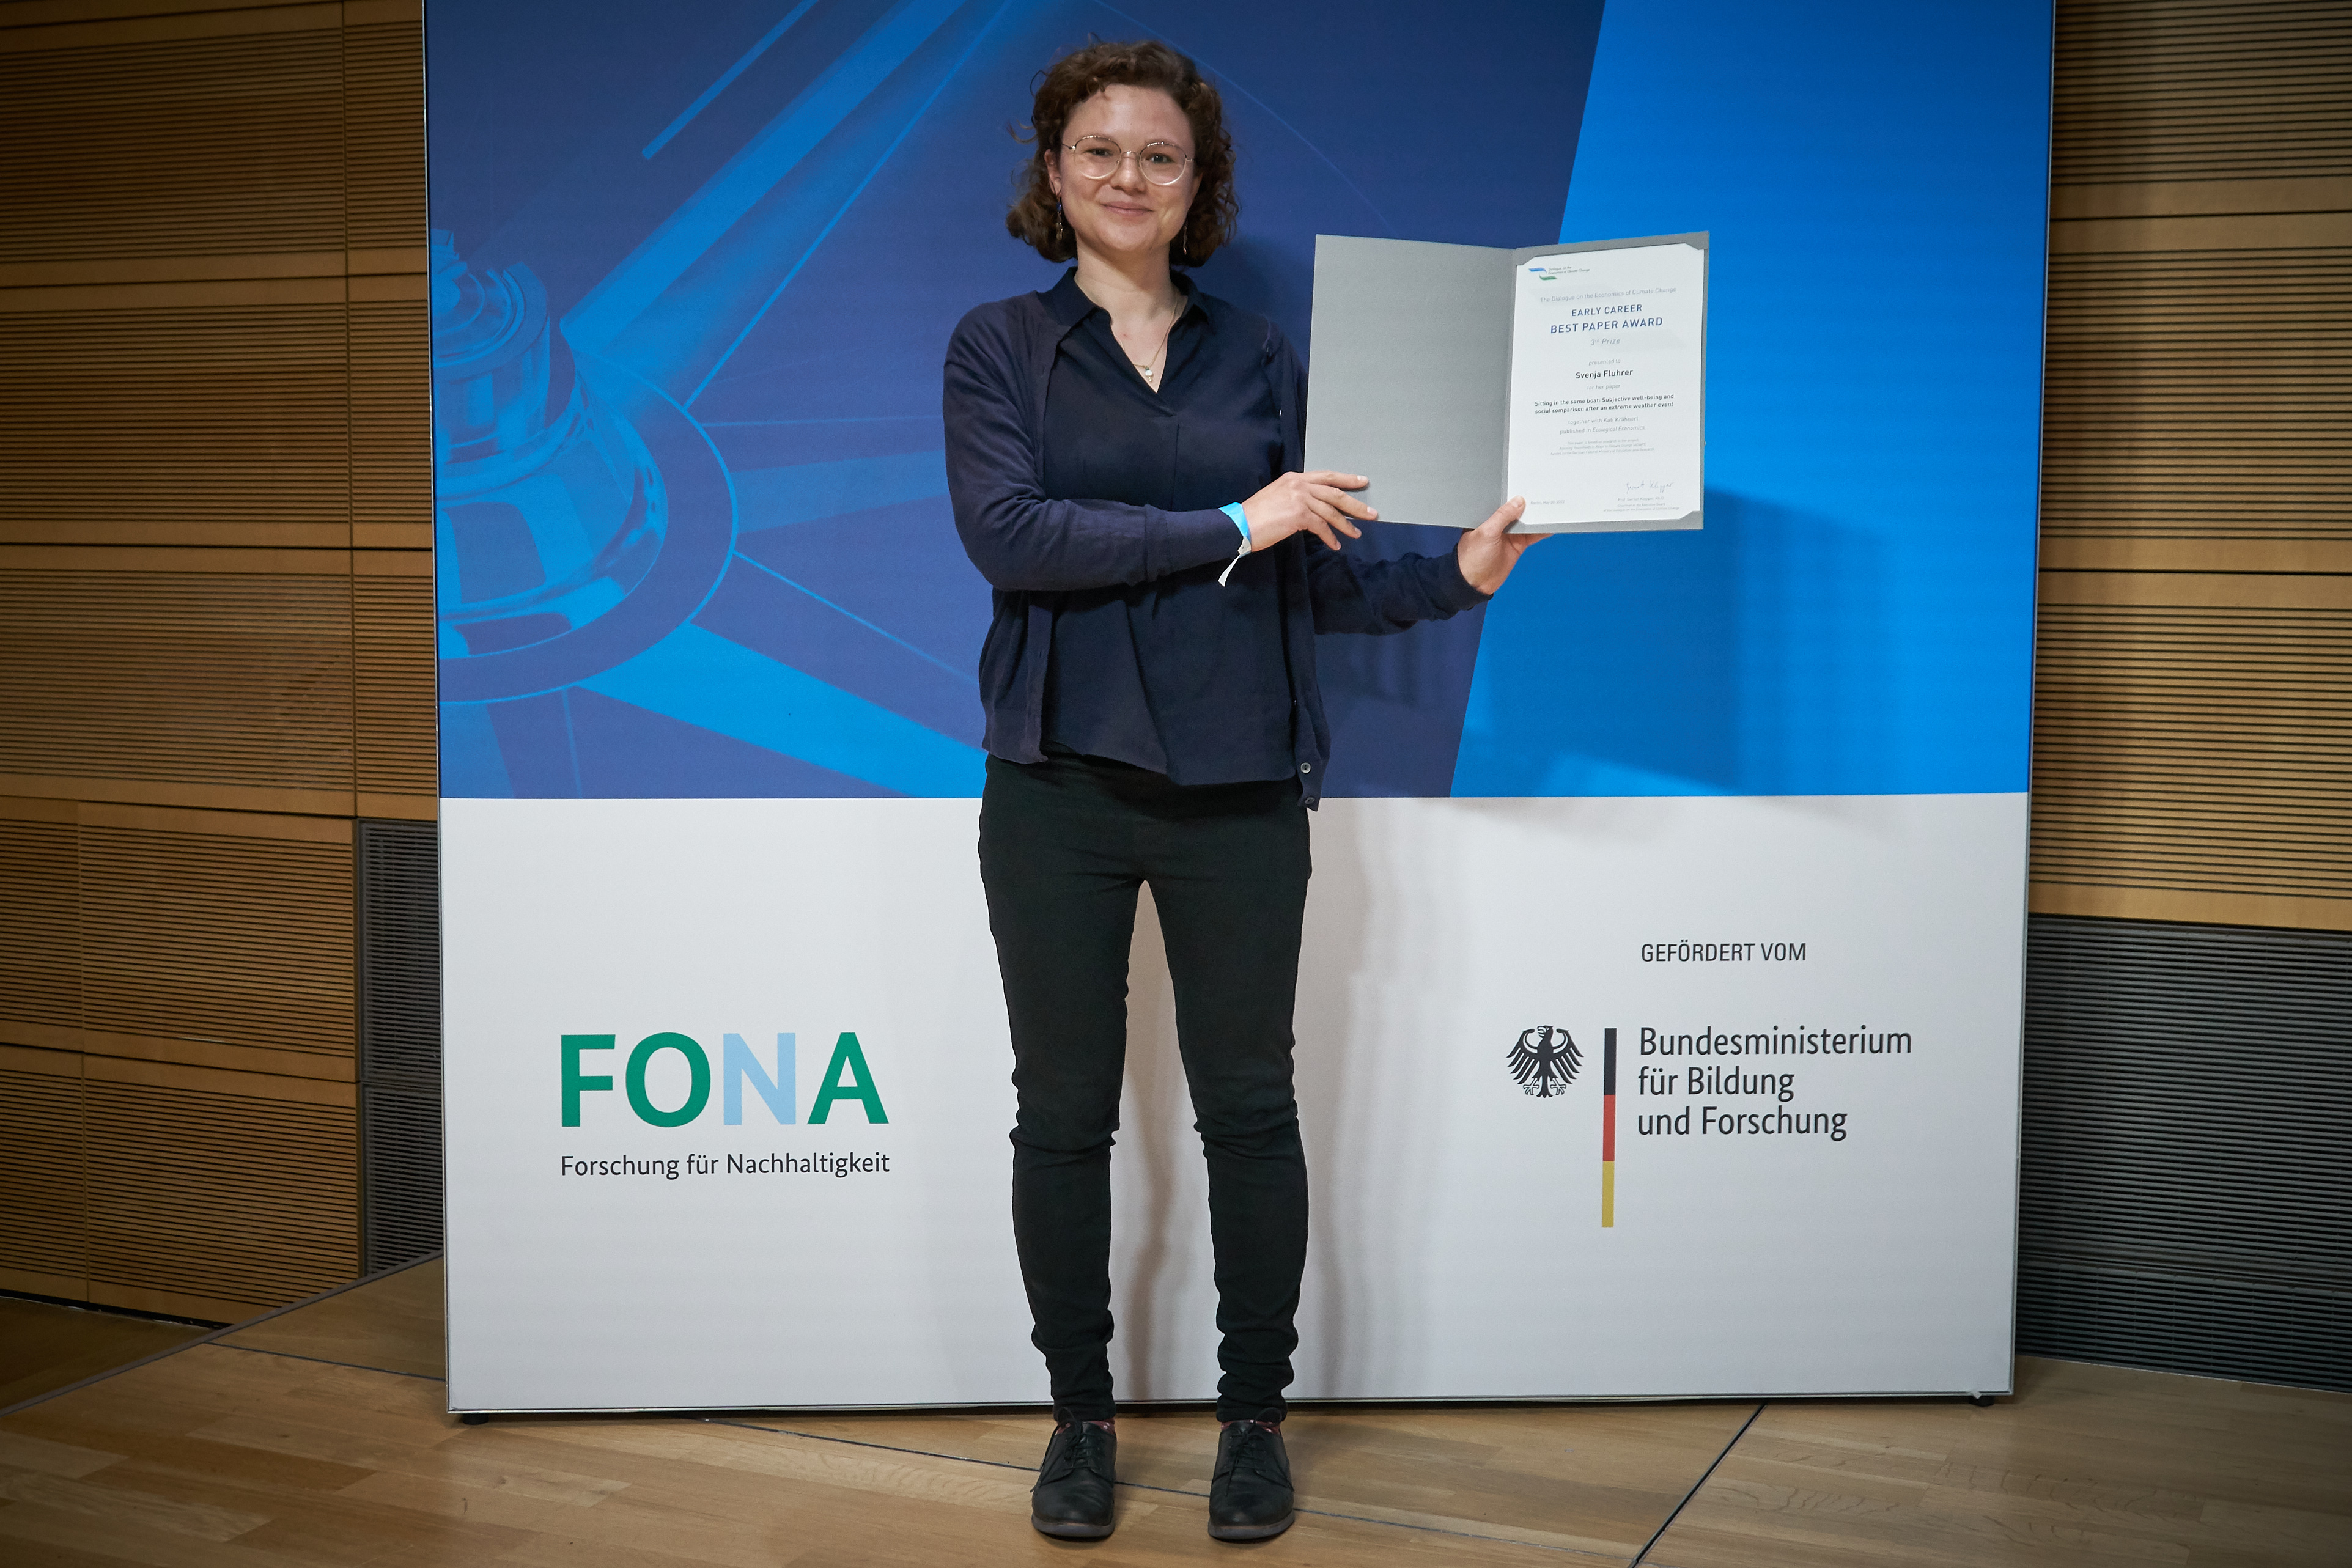 PIK-Scientist Svenja Fluhrer awarded with Early Career Best Paper Award